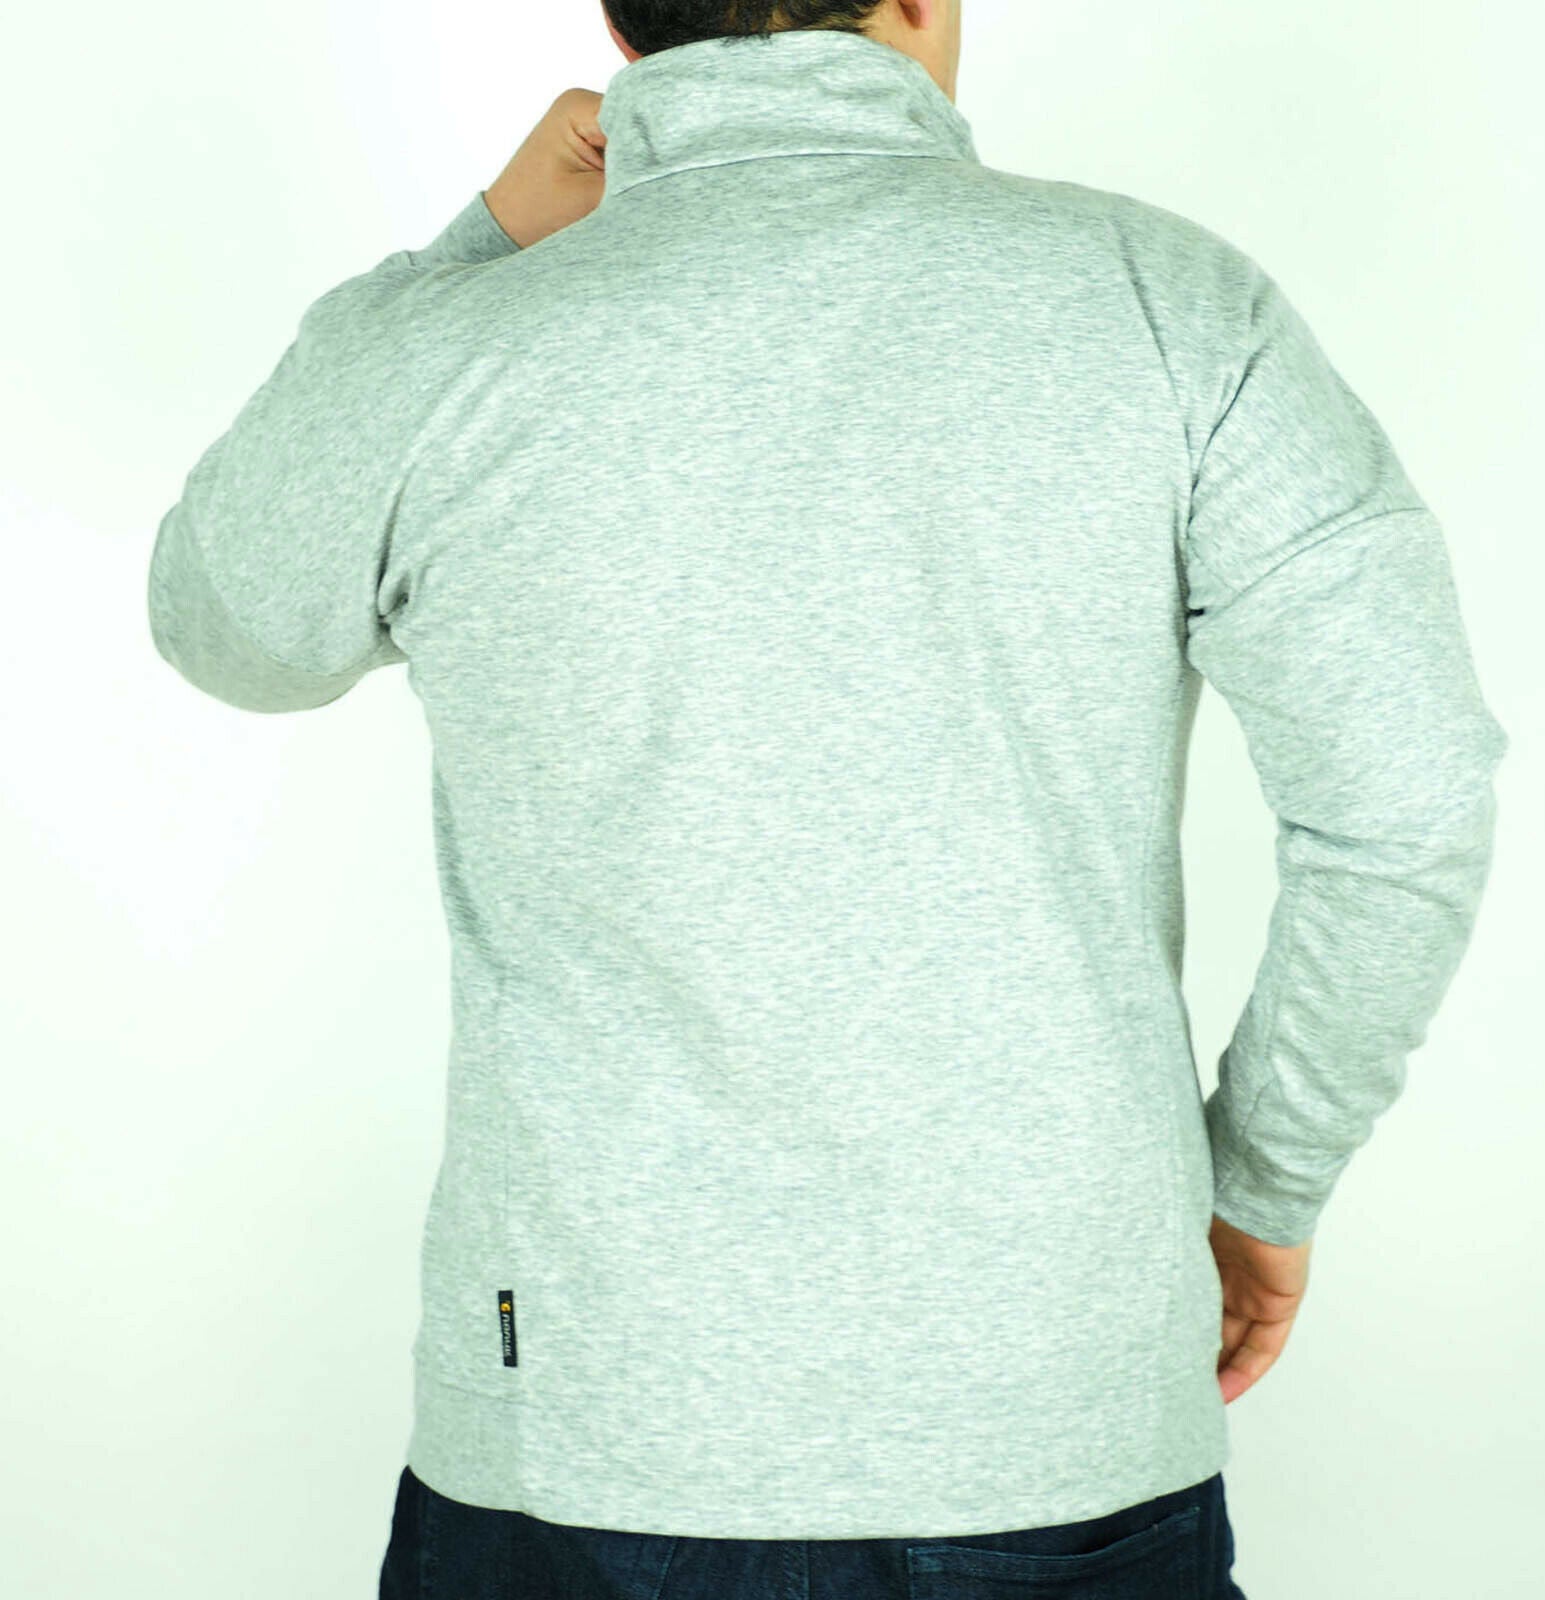 Mens Jack Wolfskin Nanuk 1707241 Light Grey Zip Up Warm Insulated Sweatshirt - London Top Style